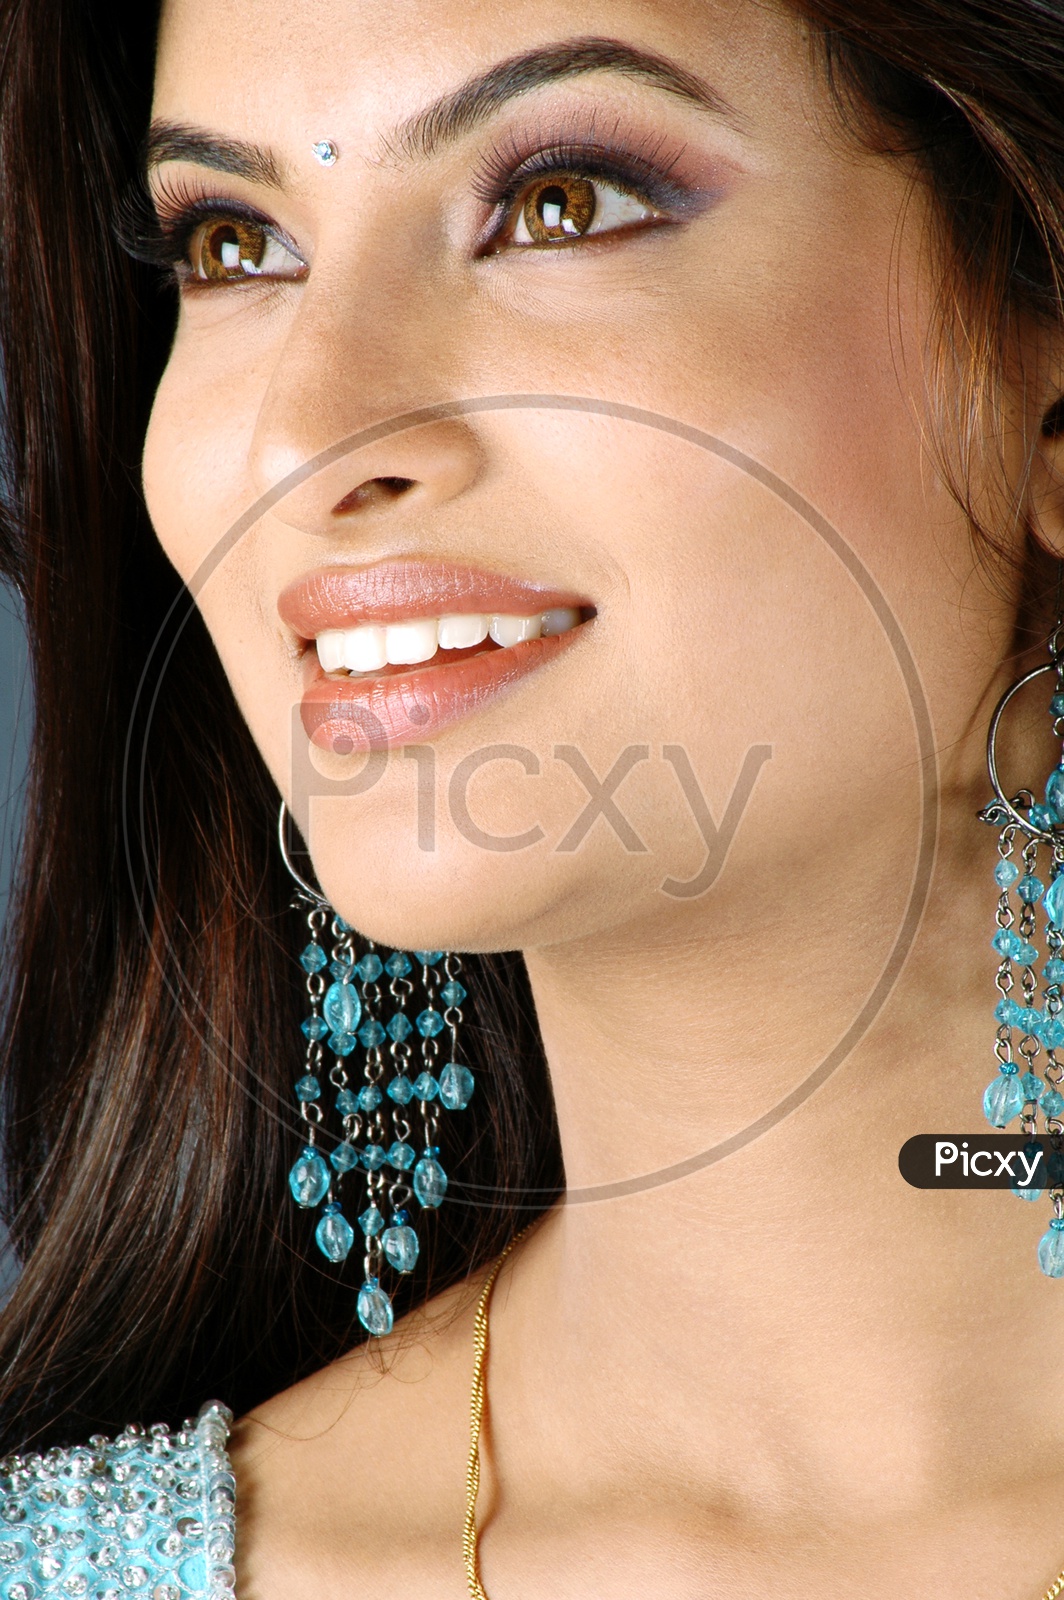 Indian Woman smiling wearing lipstick